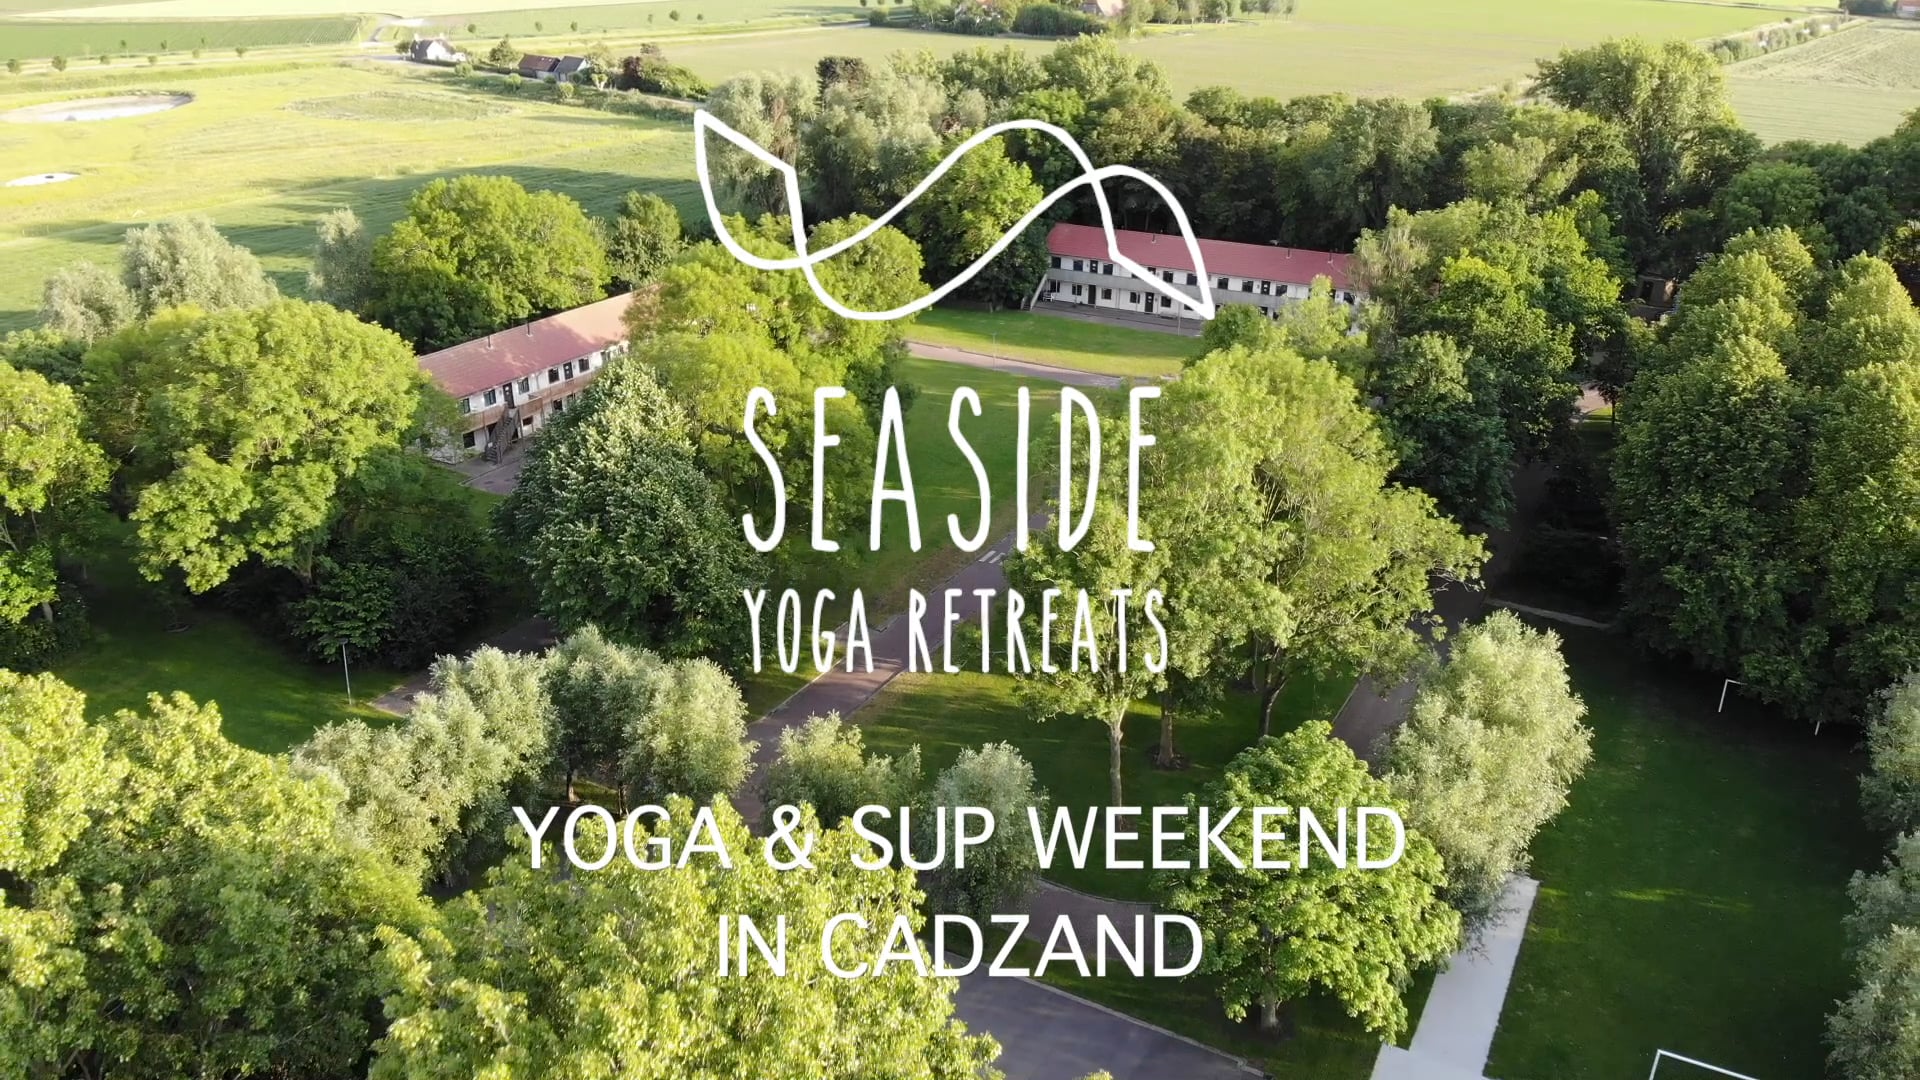 Yoga & SUP weekend met SeaSide Yoga Retreats